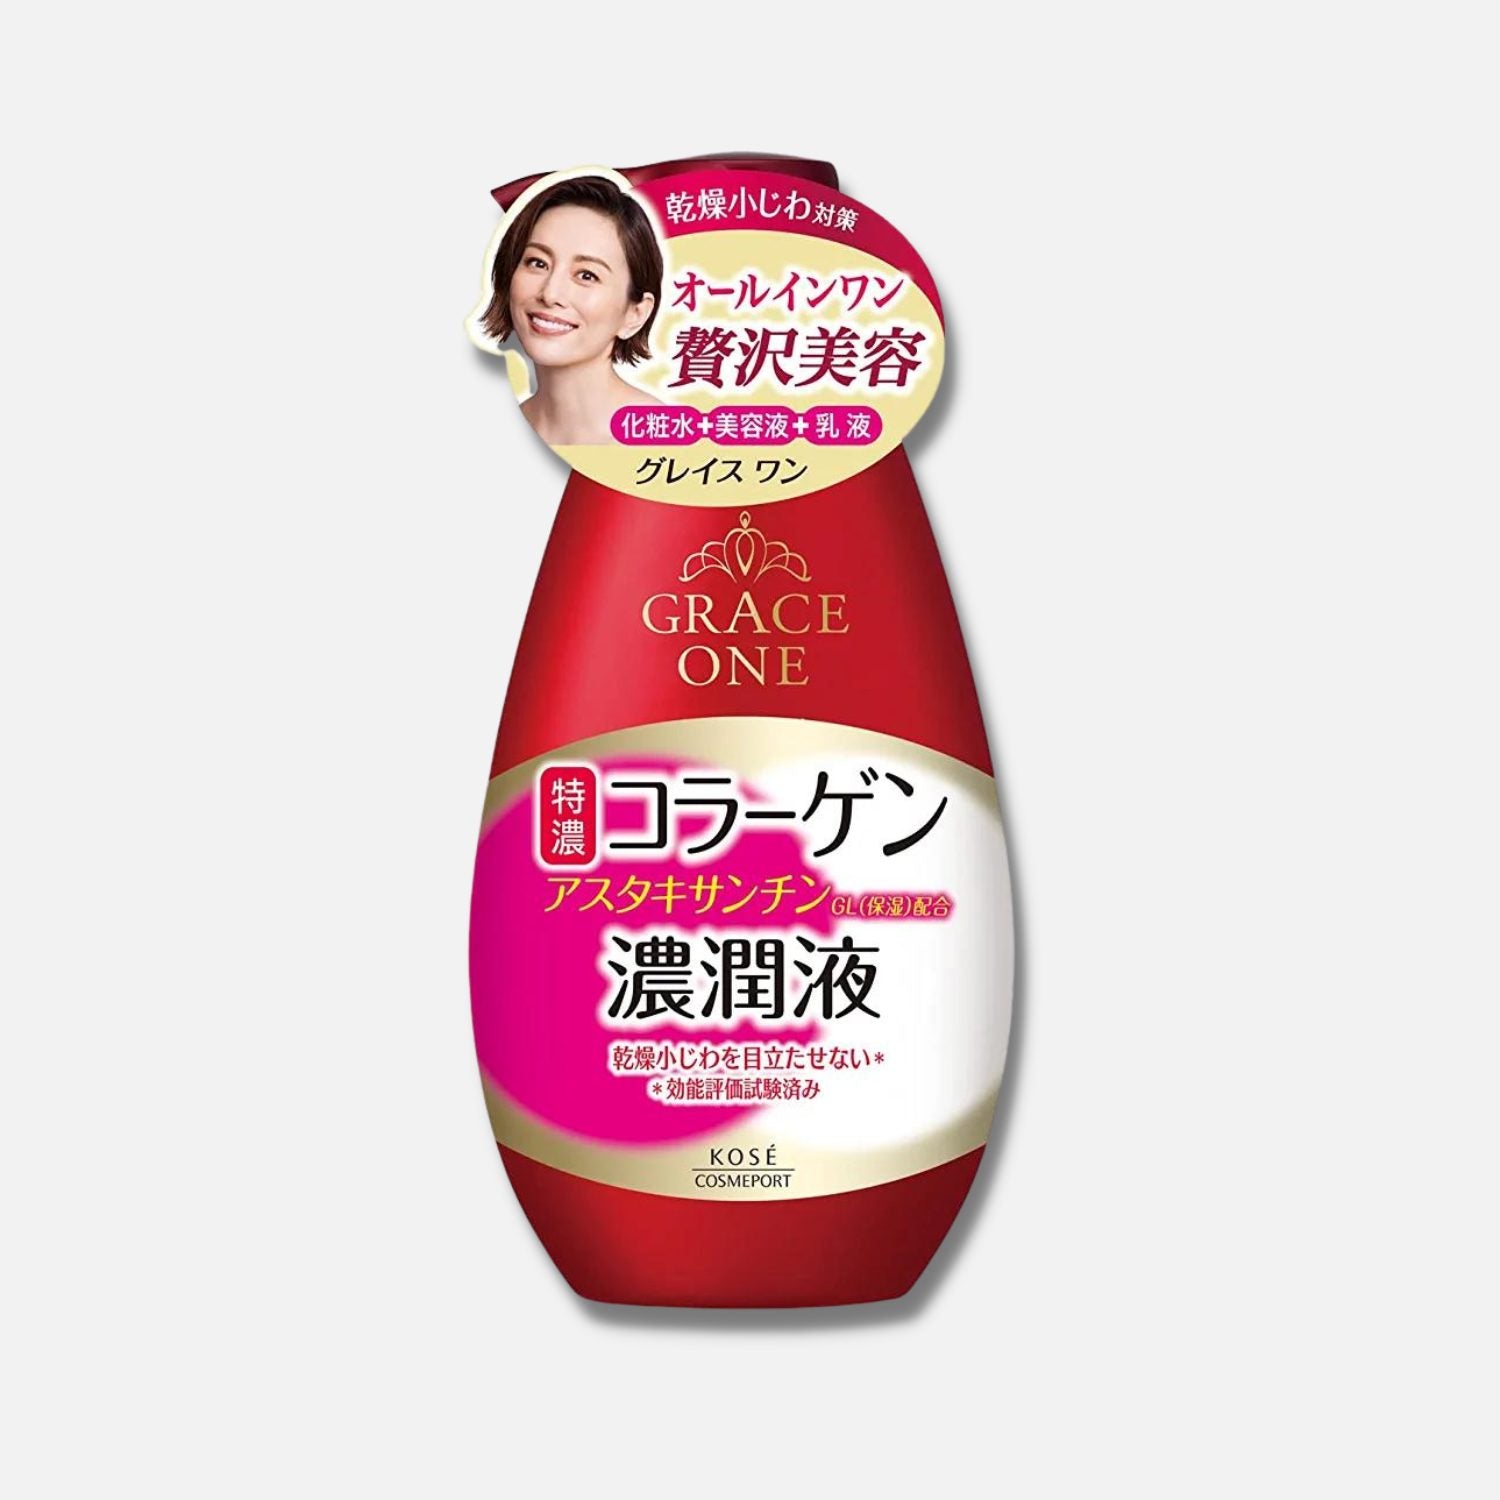 Kose Grace One Perfect Milk Skin Moisturizer 230ml - Buy Me Japan